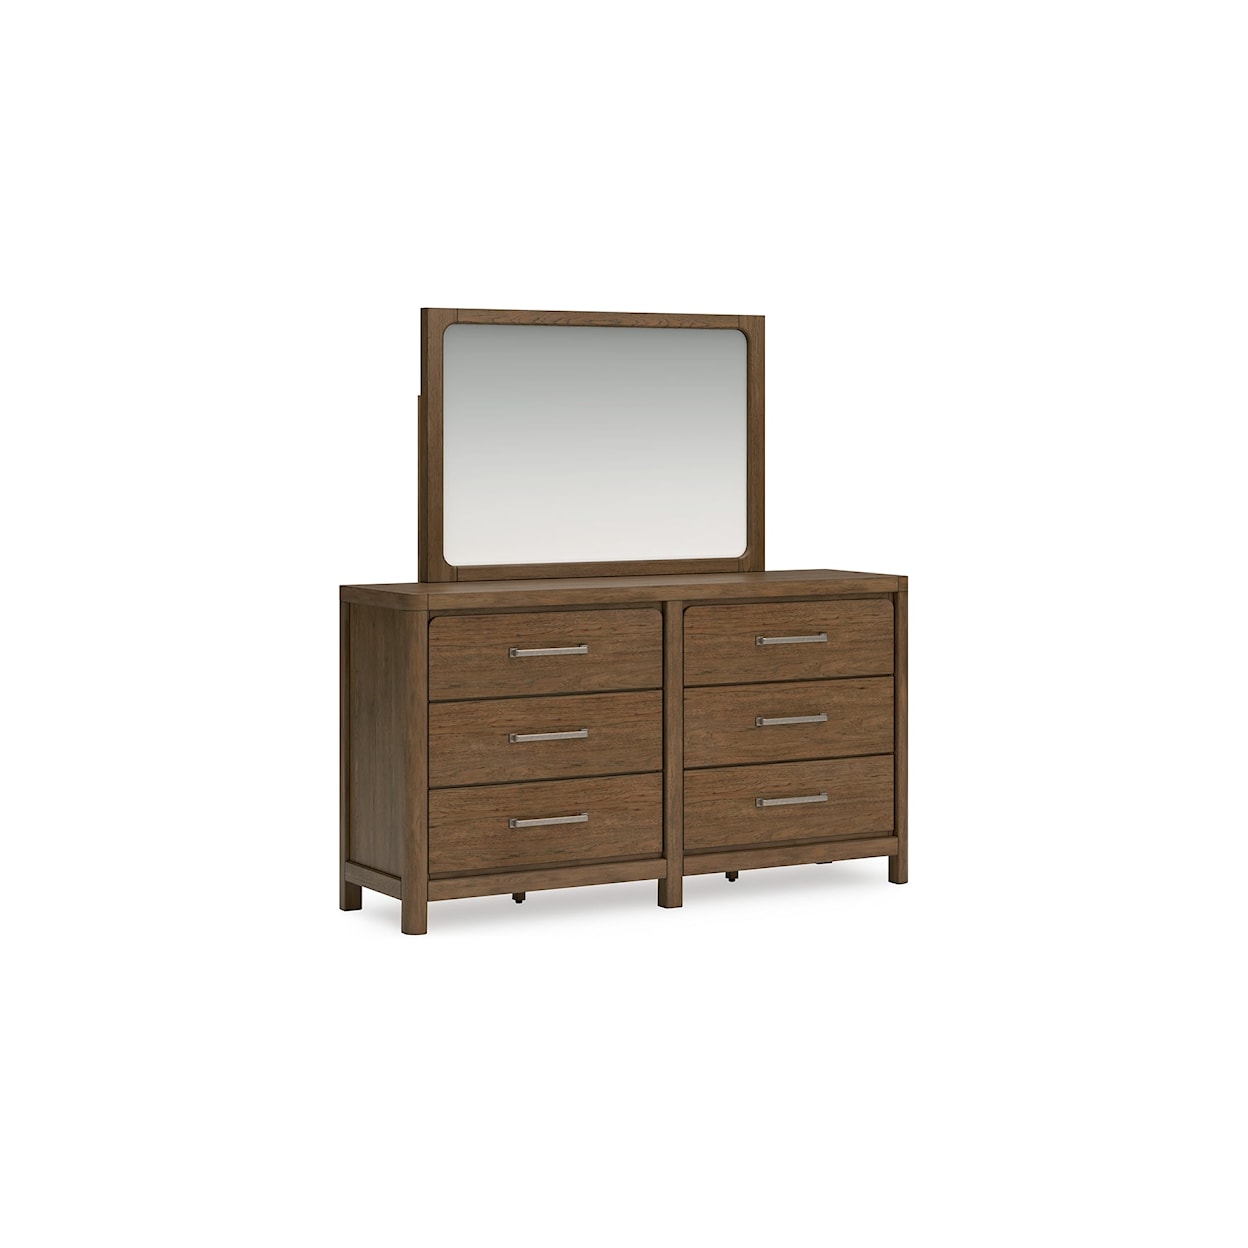 Ashley Furniture Signature Design Cabalynn Dresser and Mirror Set